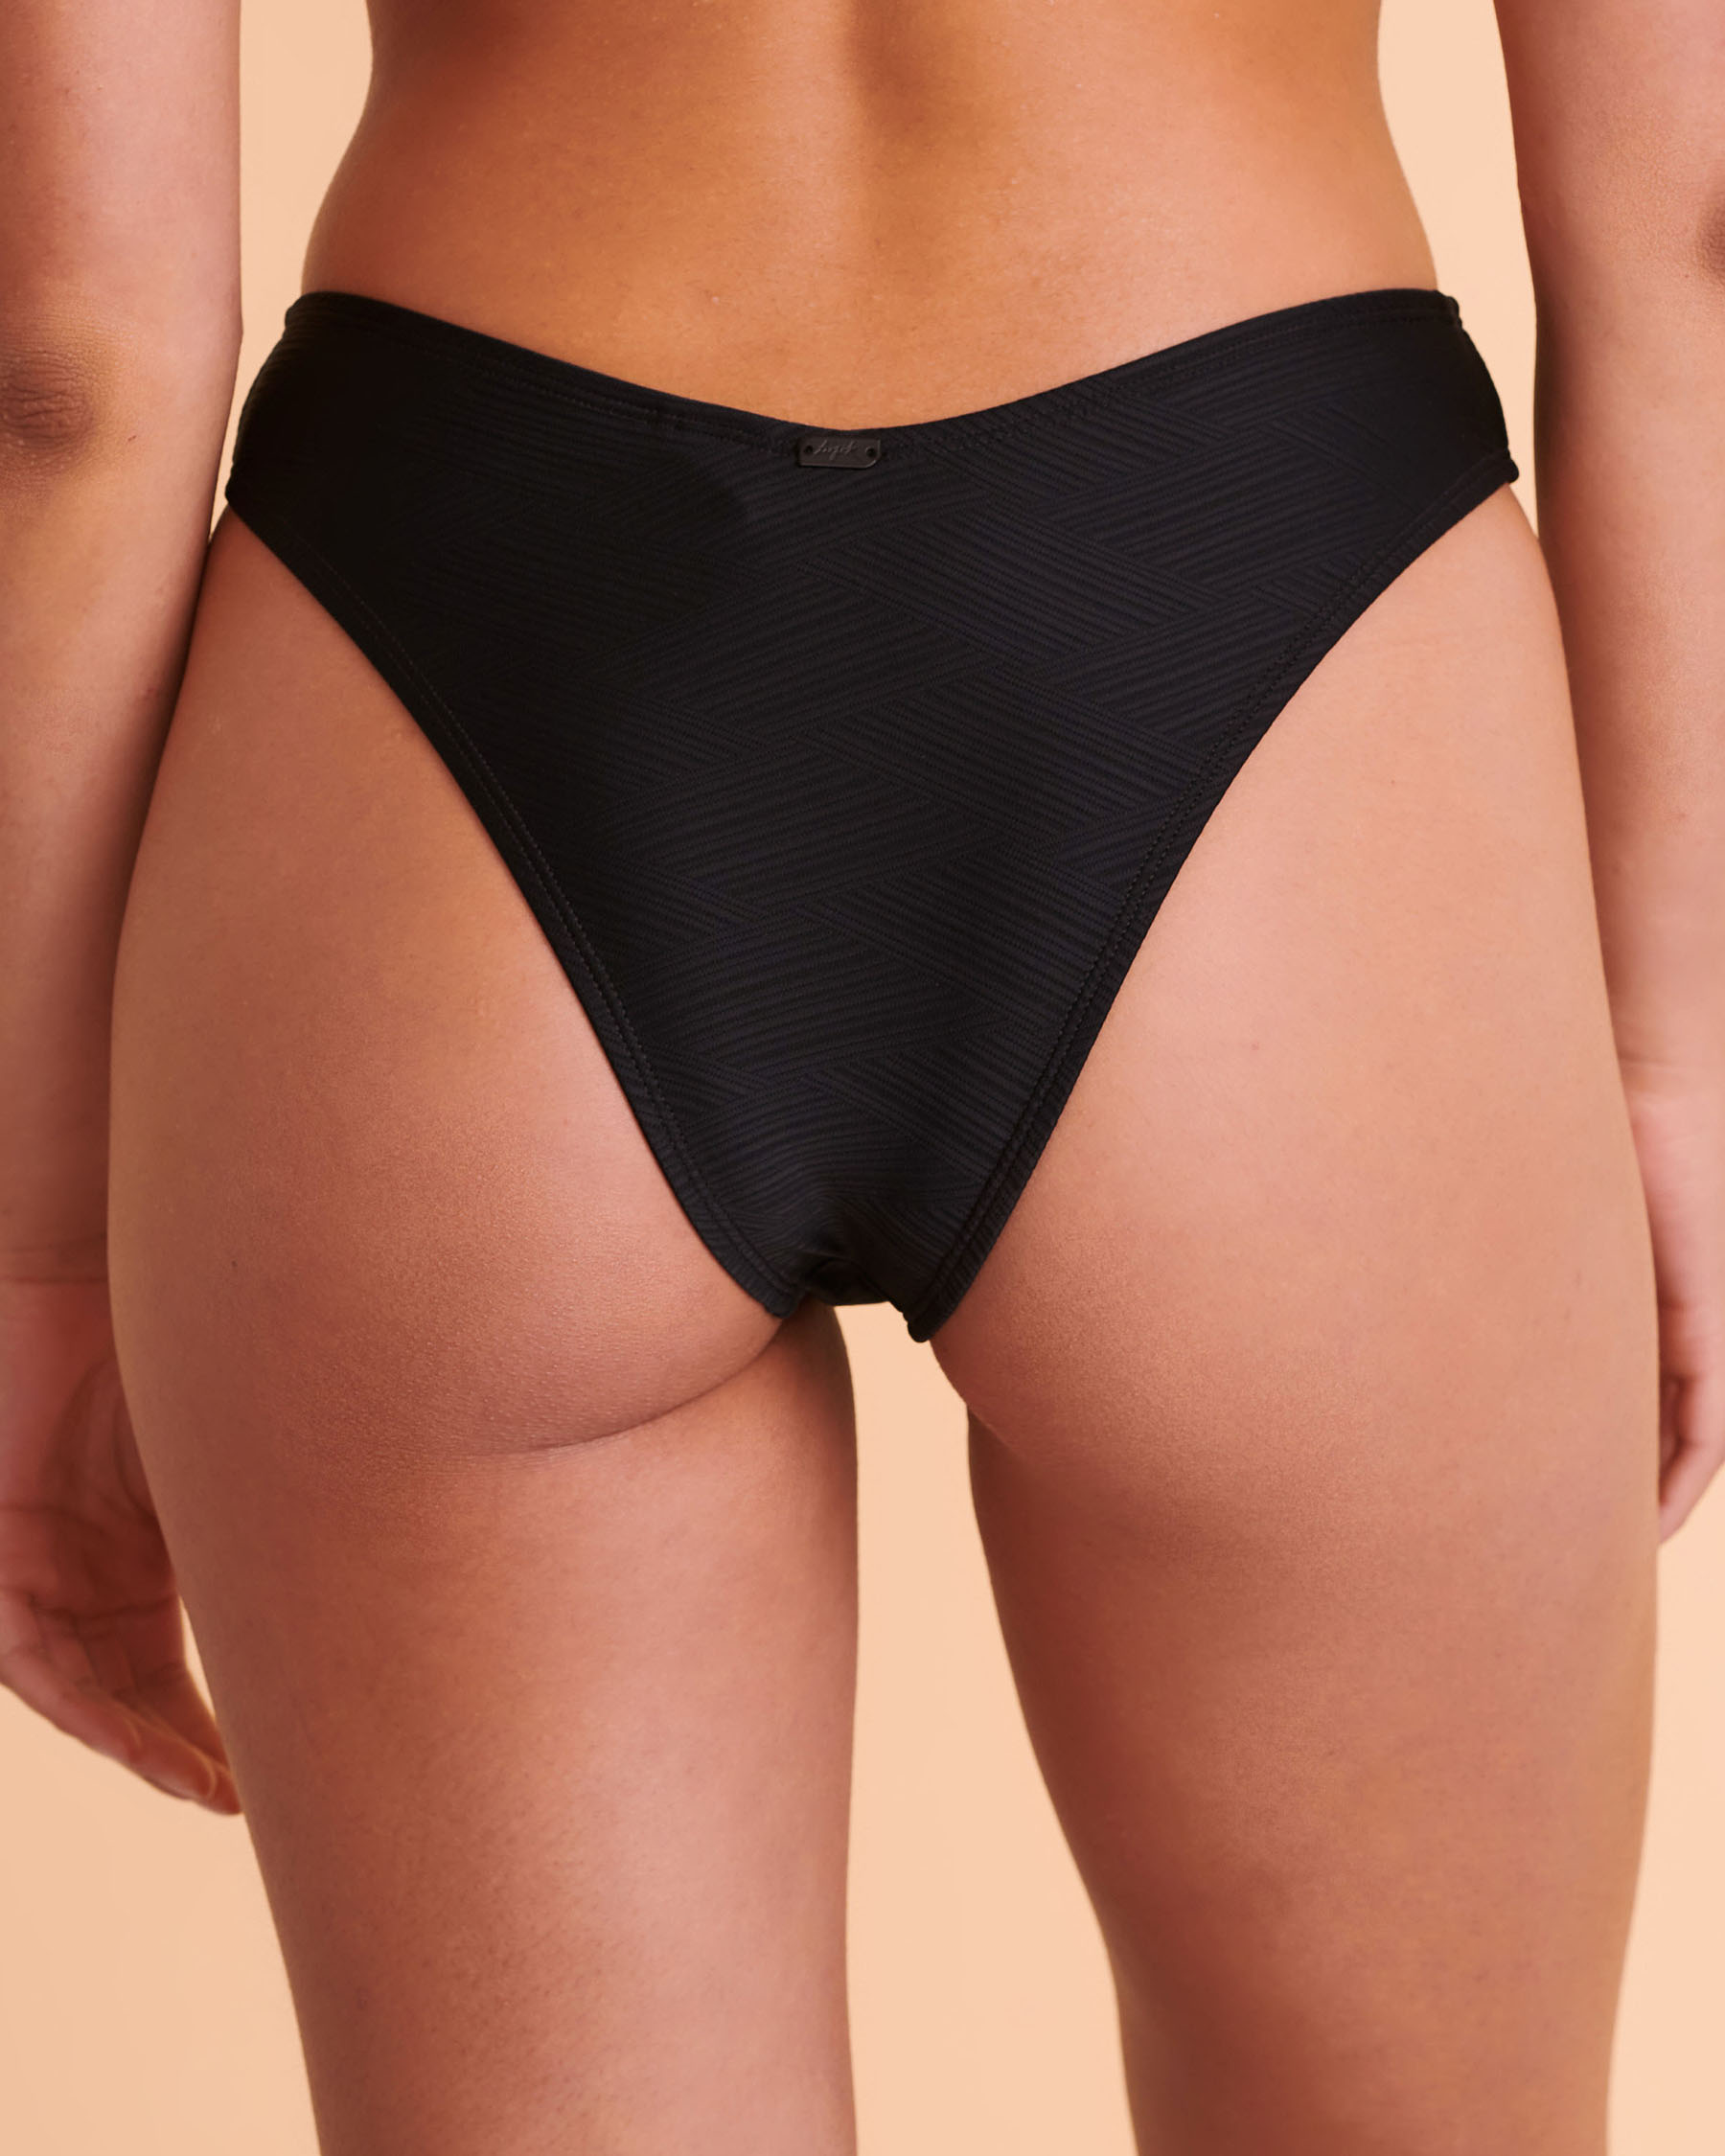 TROPIK TEXTURED Thong Bikini Bottom Black 01300168 - View2